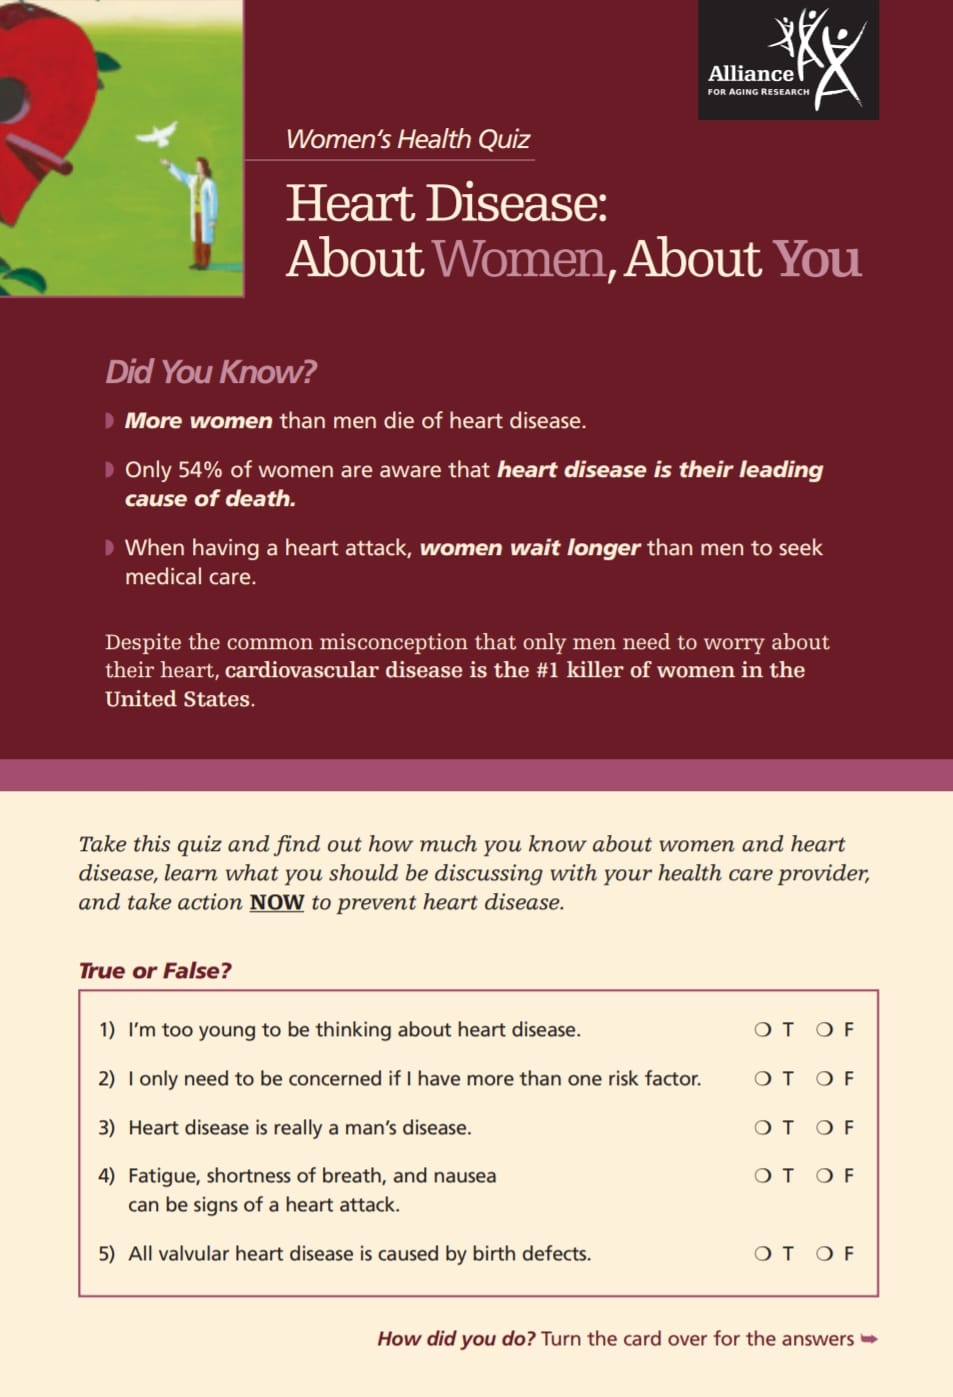 Women's Health Quiz response sheet.